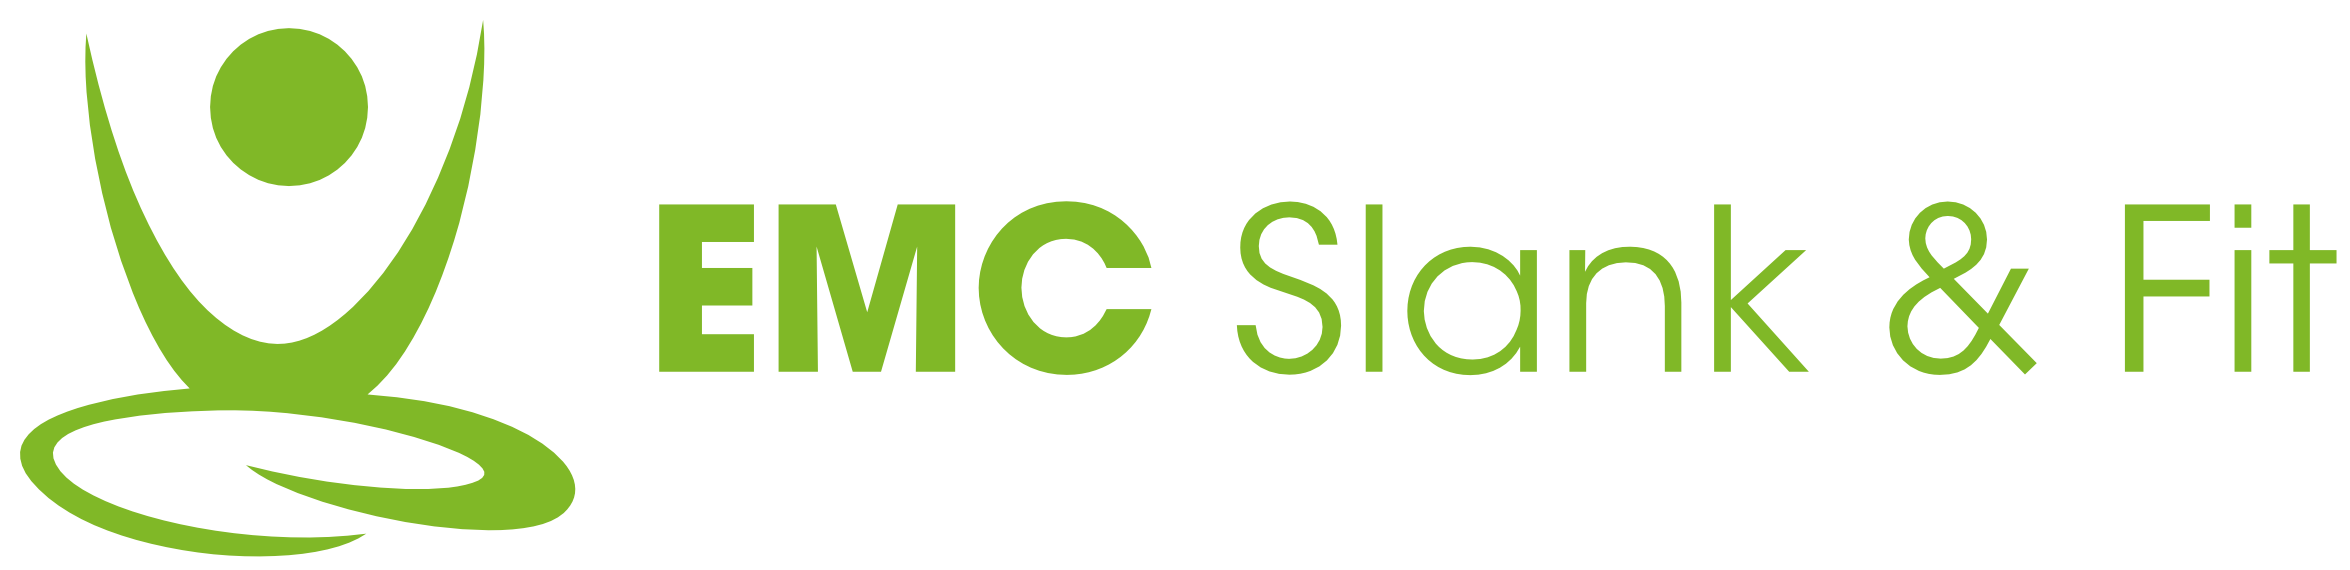 EMC Slank & Fit